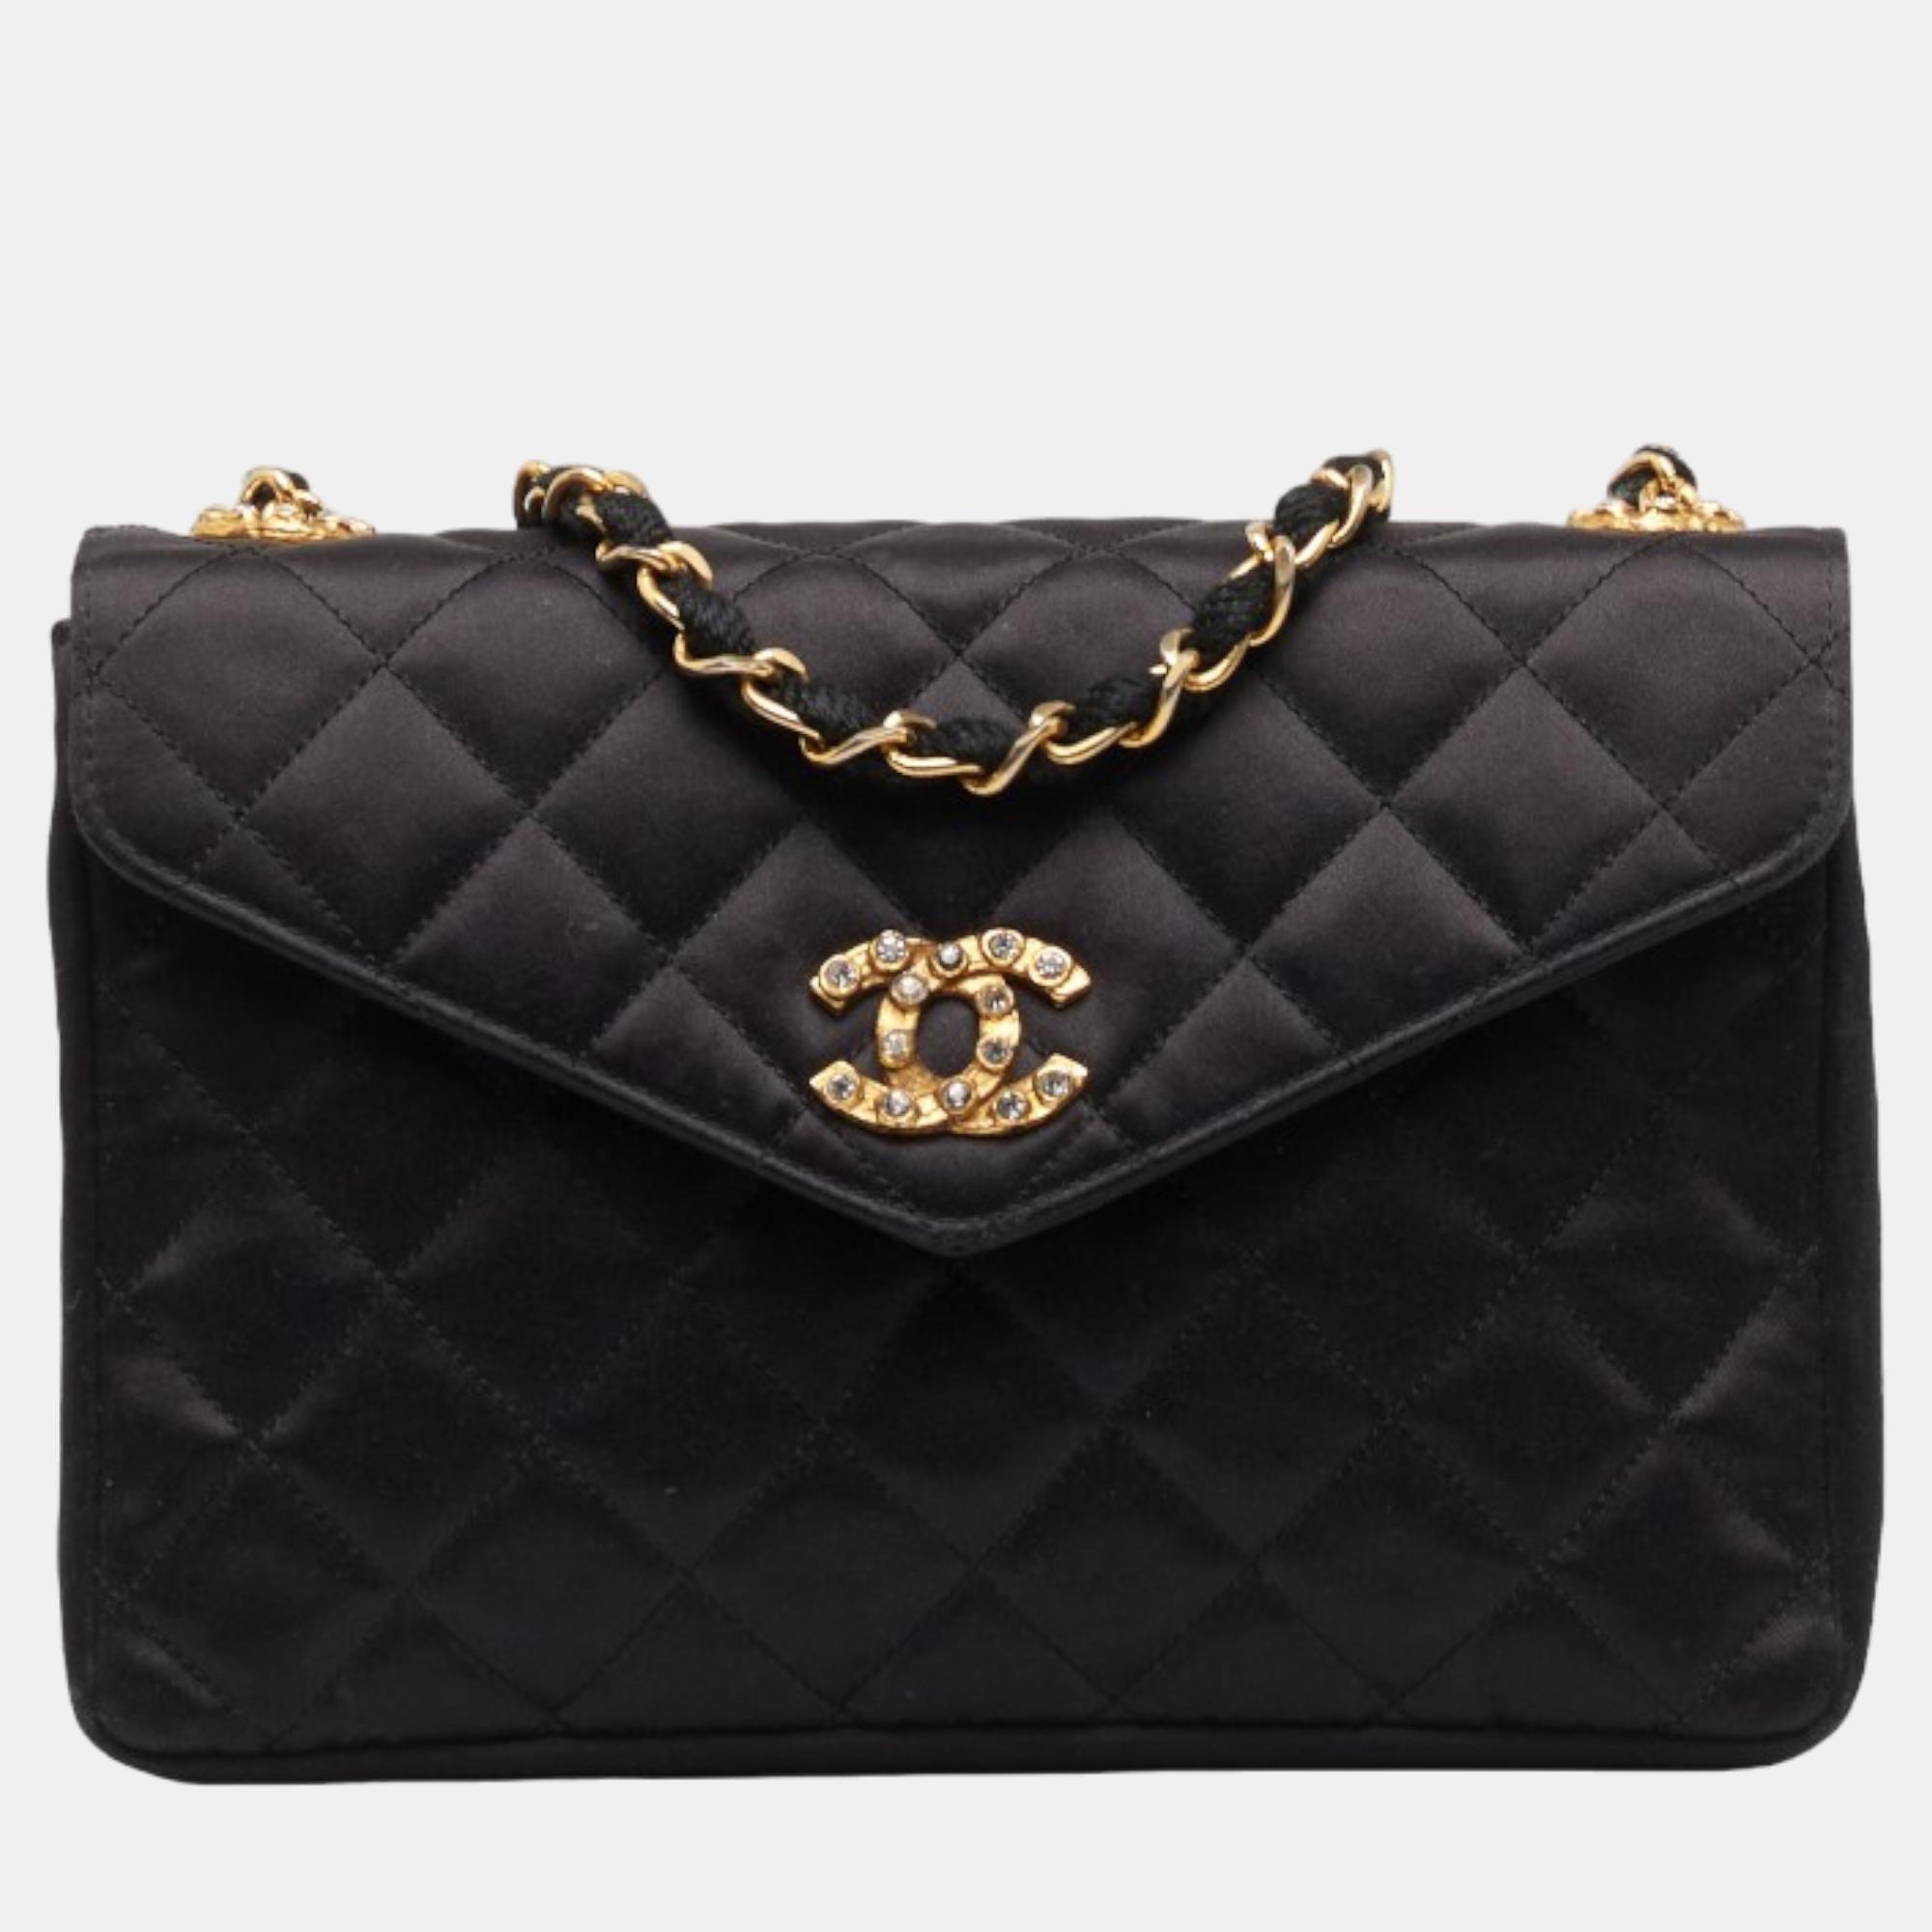 Chanel black satin quilted velvet flap bag